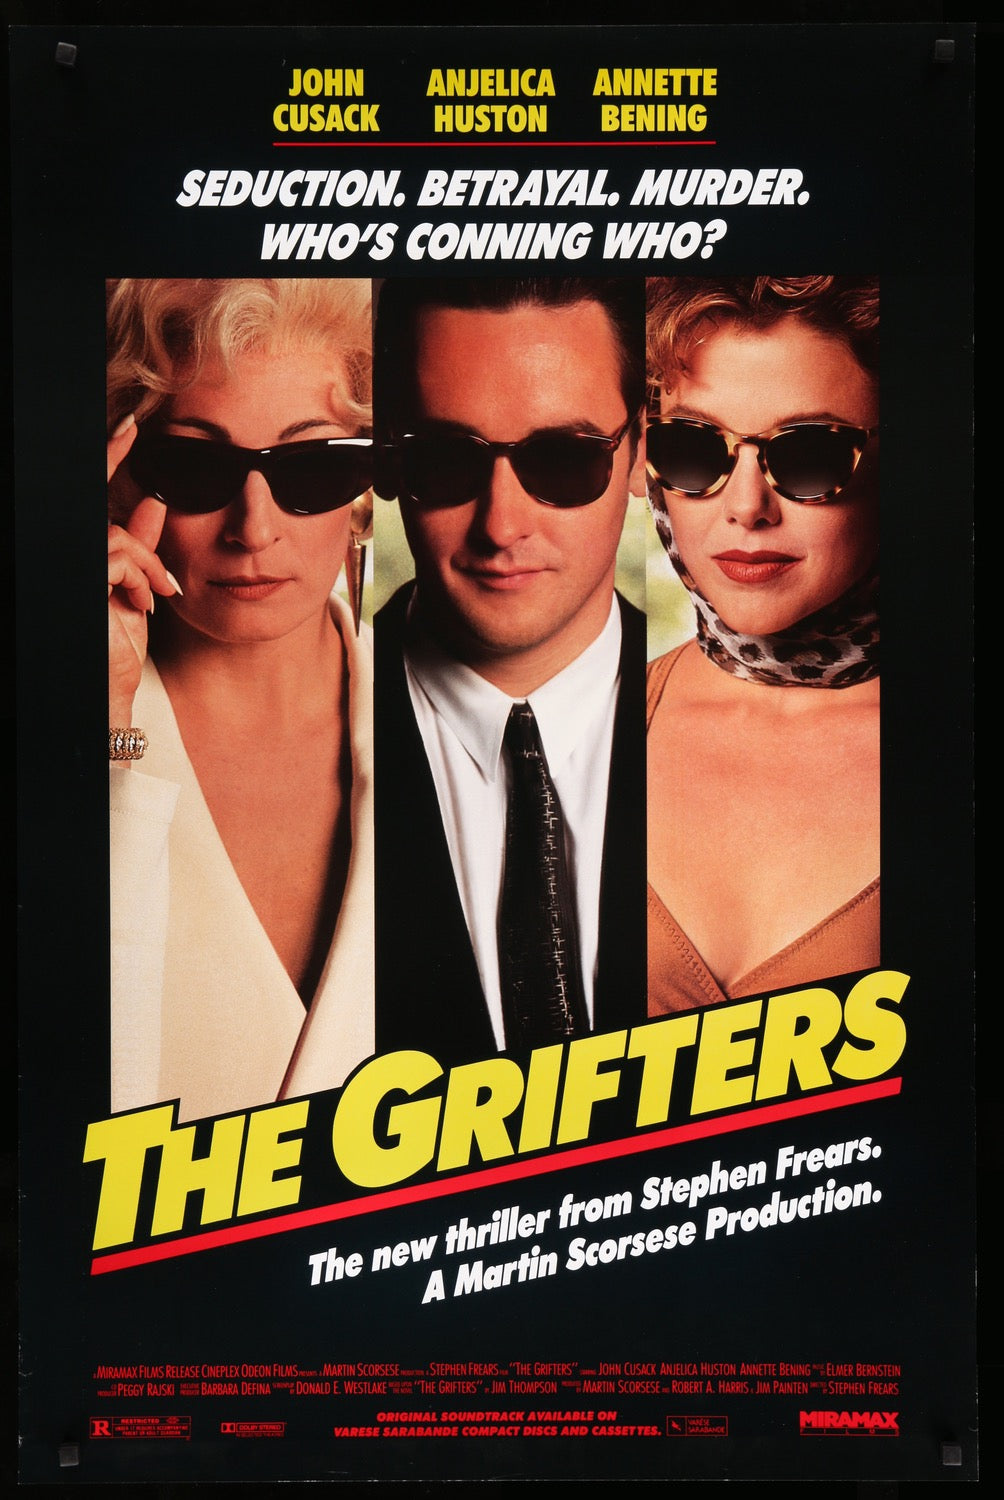 Grifters (1990) original movie poster for sale at Original Film Art